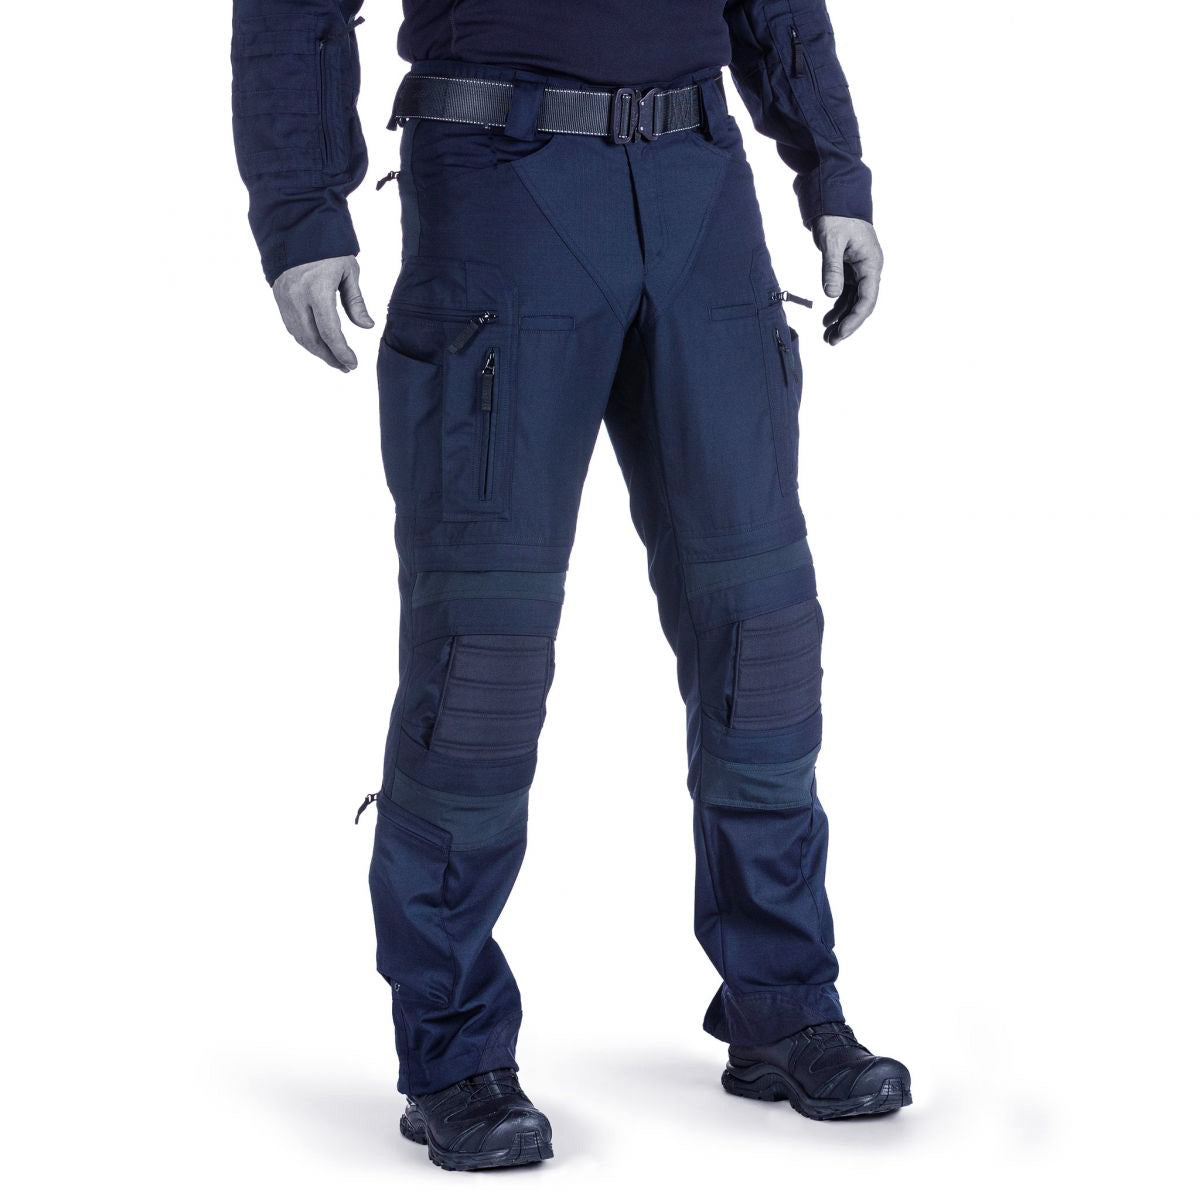 Combat Pants, Law Enforcement Trousers, Waterproof And Wear-resistant Multi-pocket Pants